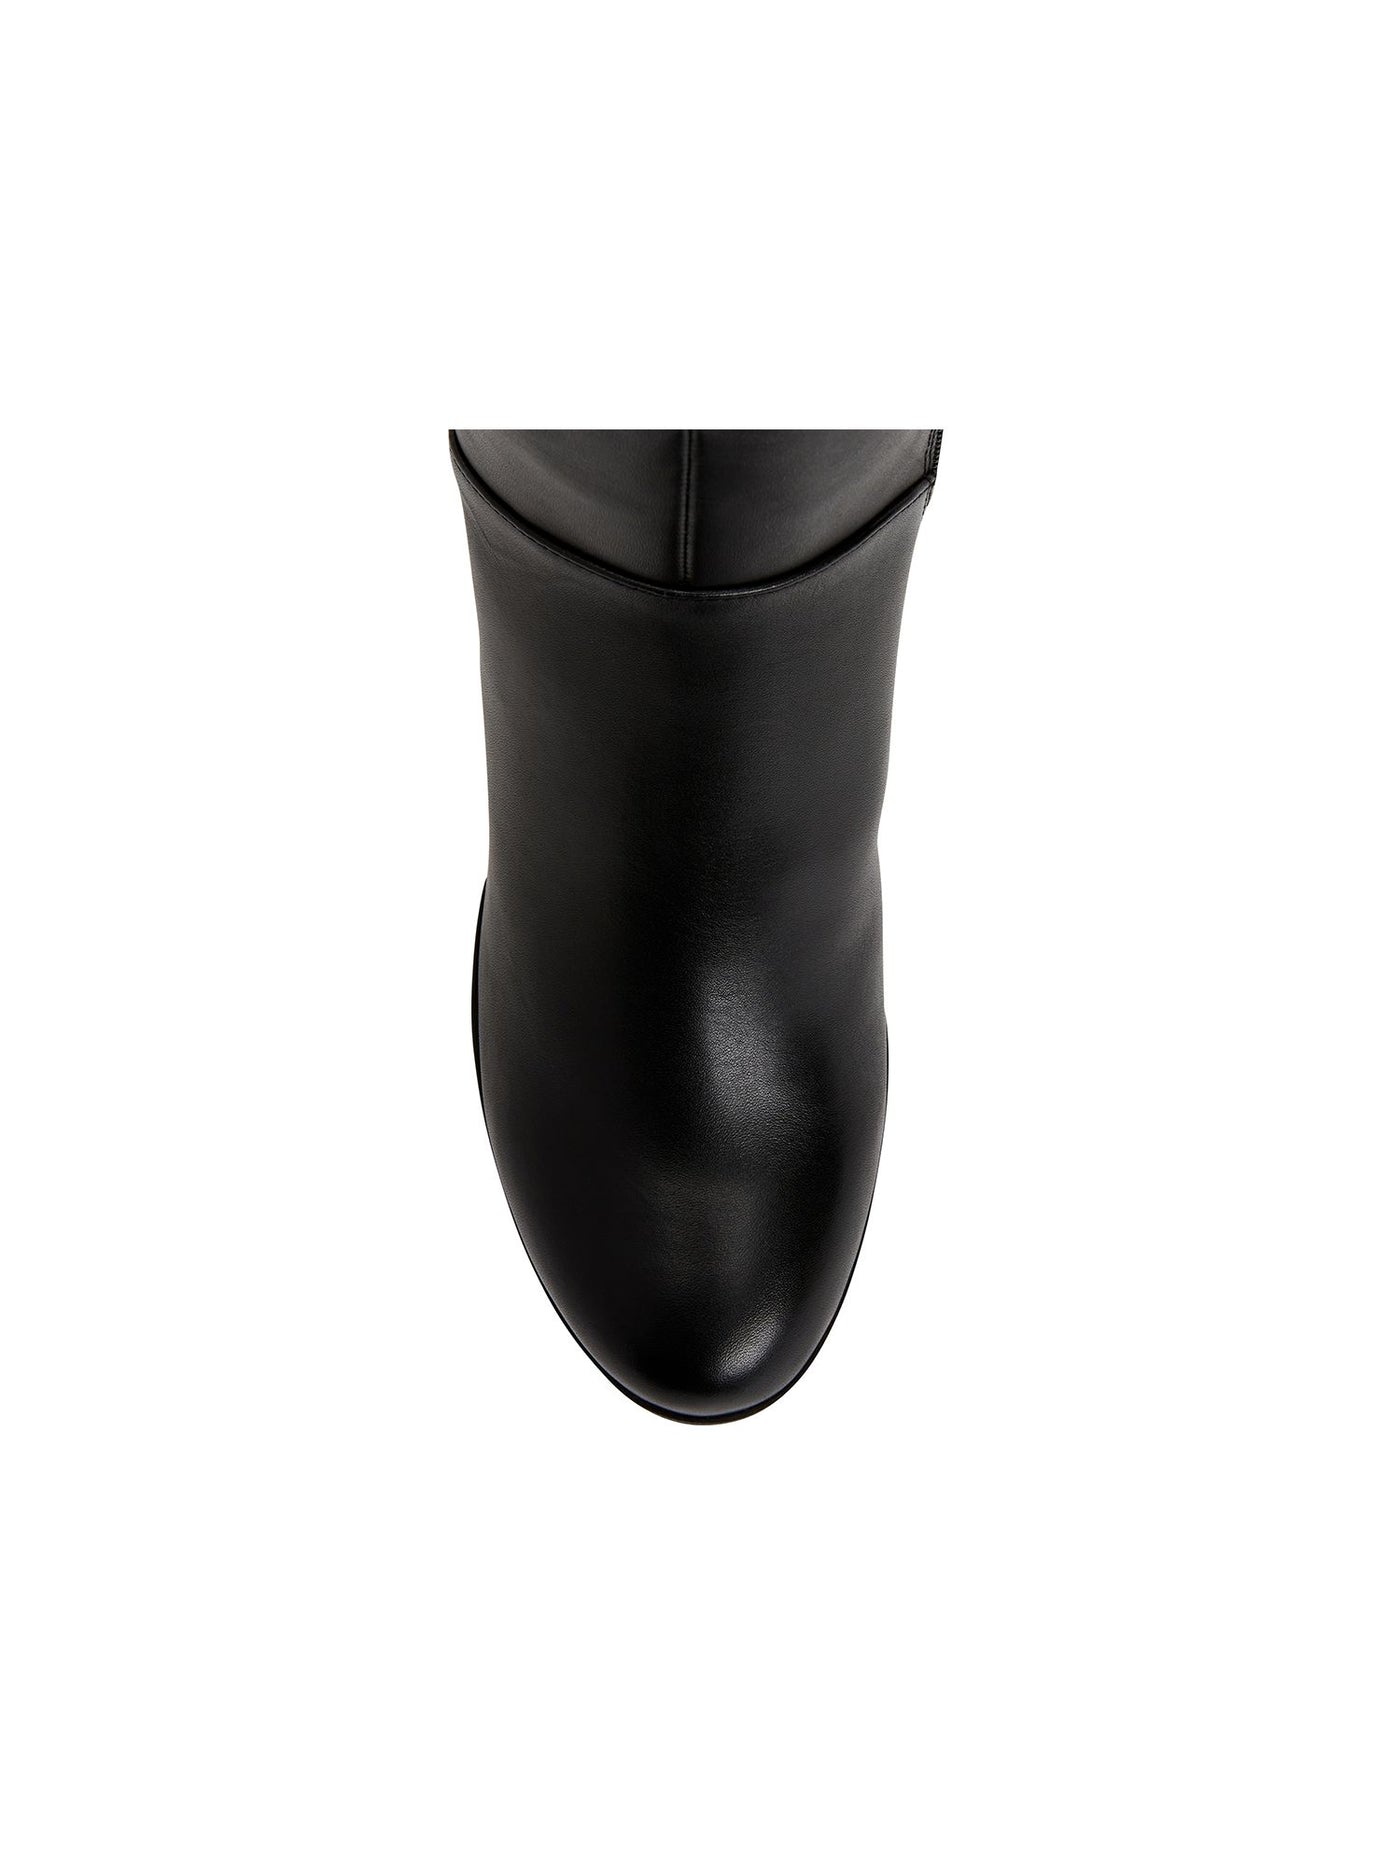 GIANI BERNINI Womens Black Slip Resistant Comfort Adonnys Round Toe Block Heel Zip-Up Leather Dress Boots 6 M